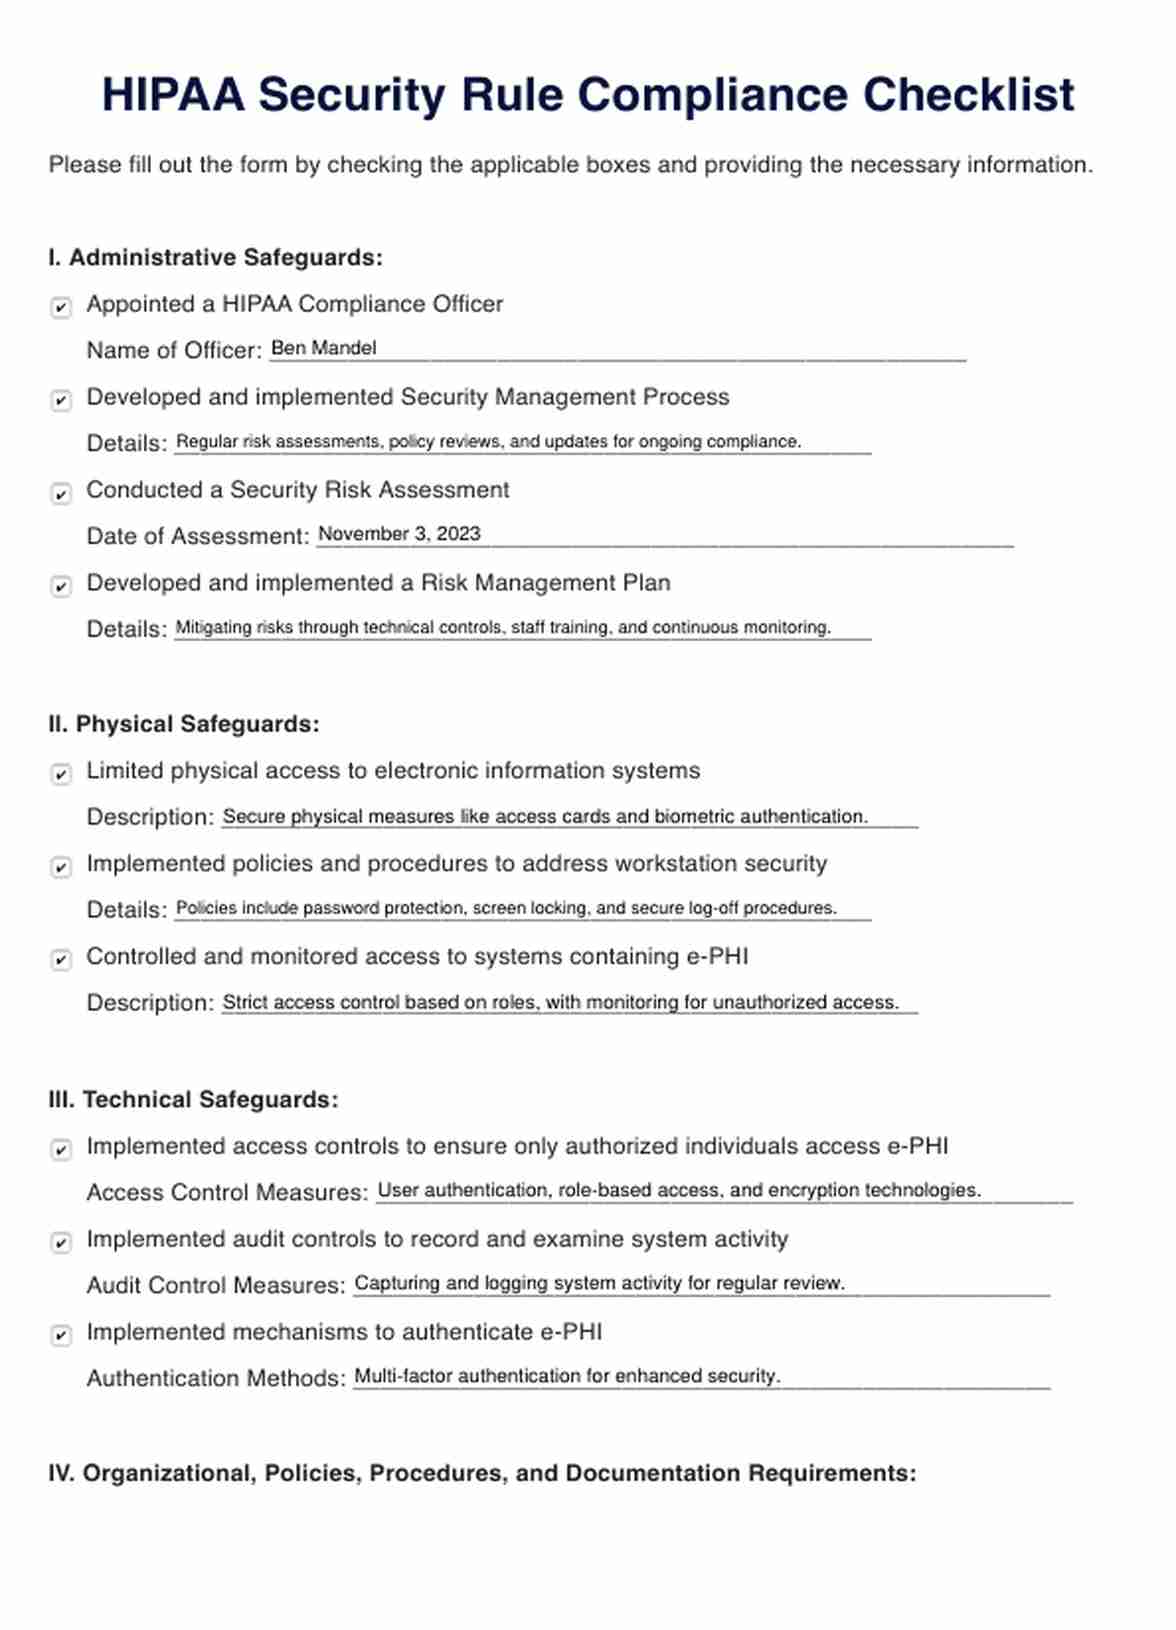 HIPAA Security Rule Checklist PDF Example